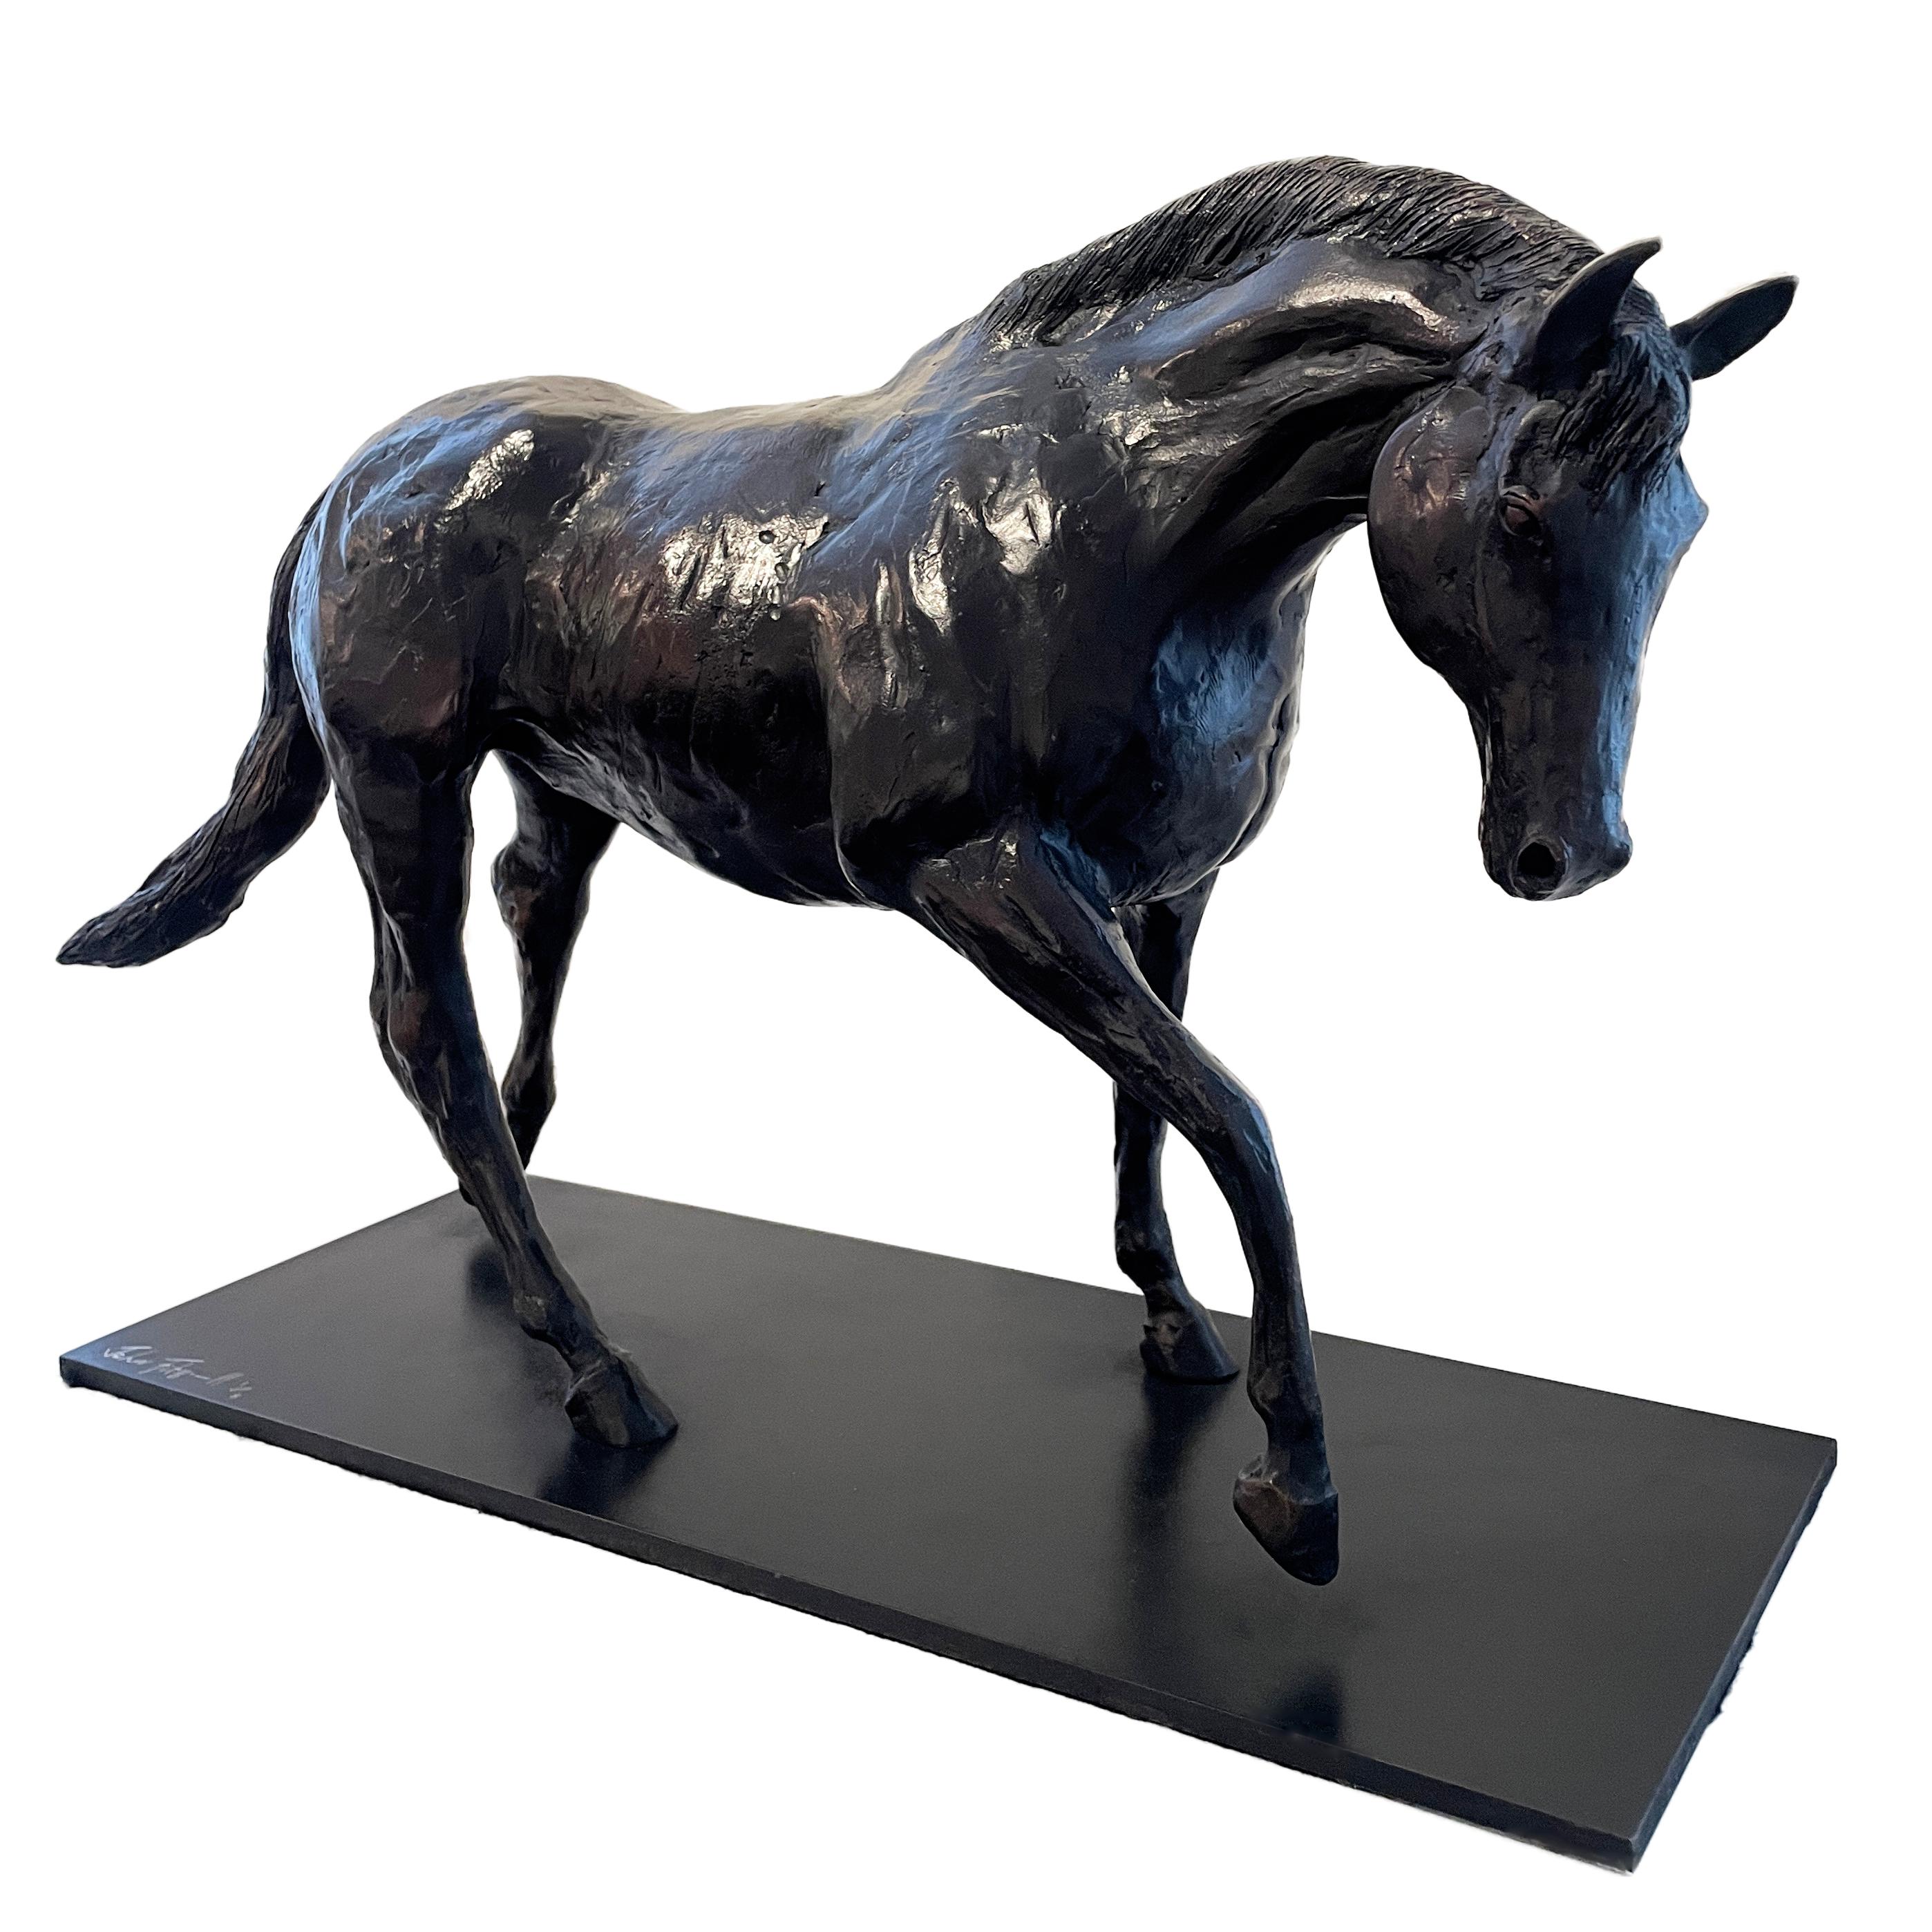 Walking stallion - Sculpture by John Fitzgerald